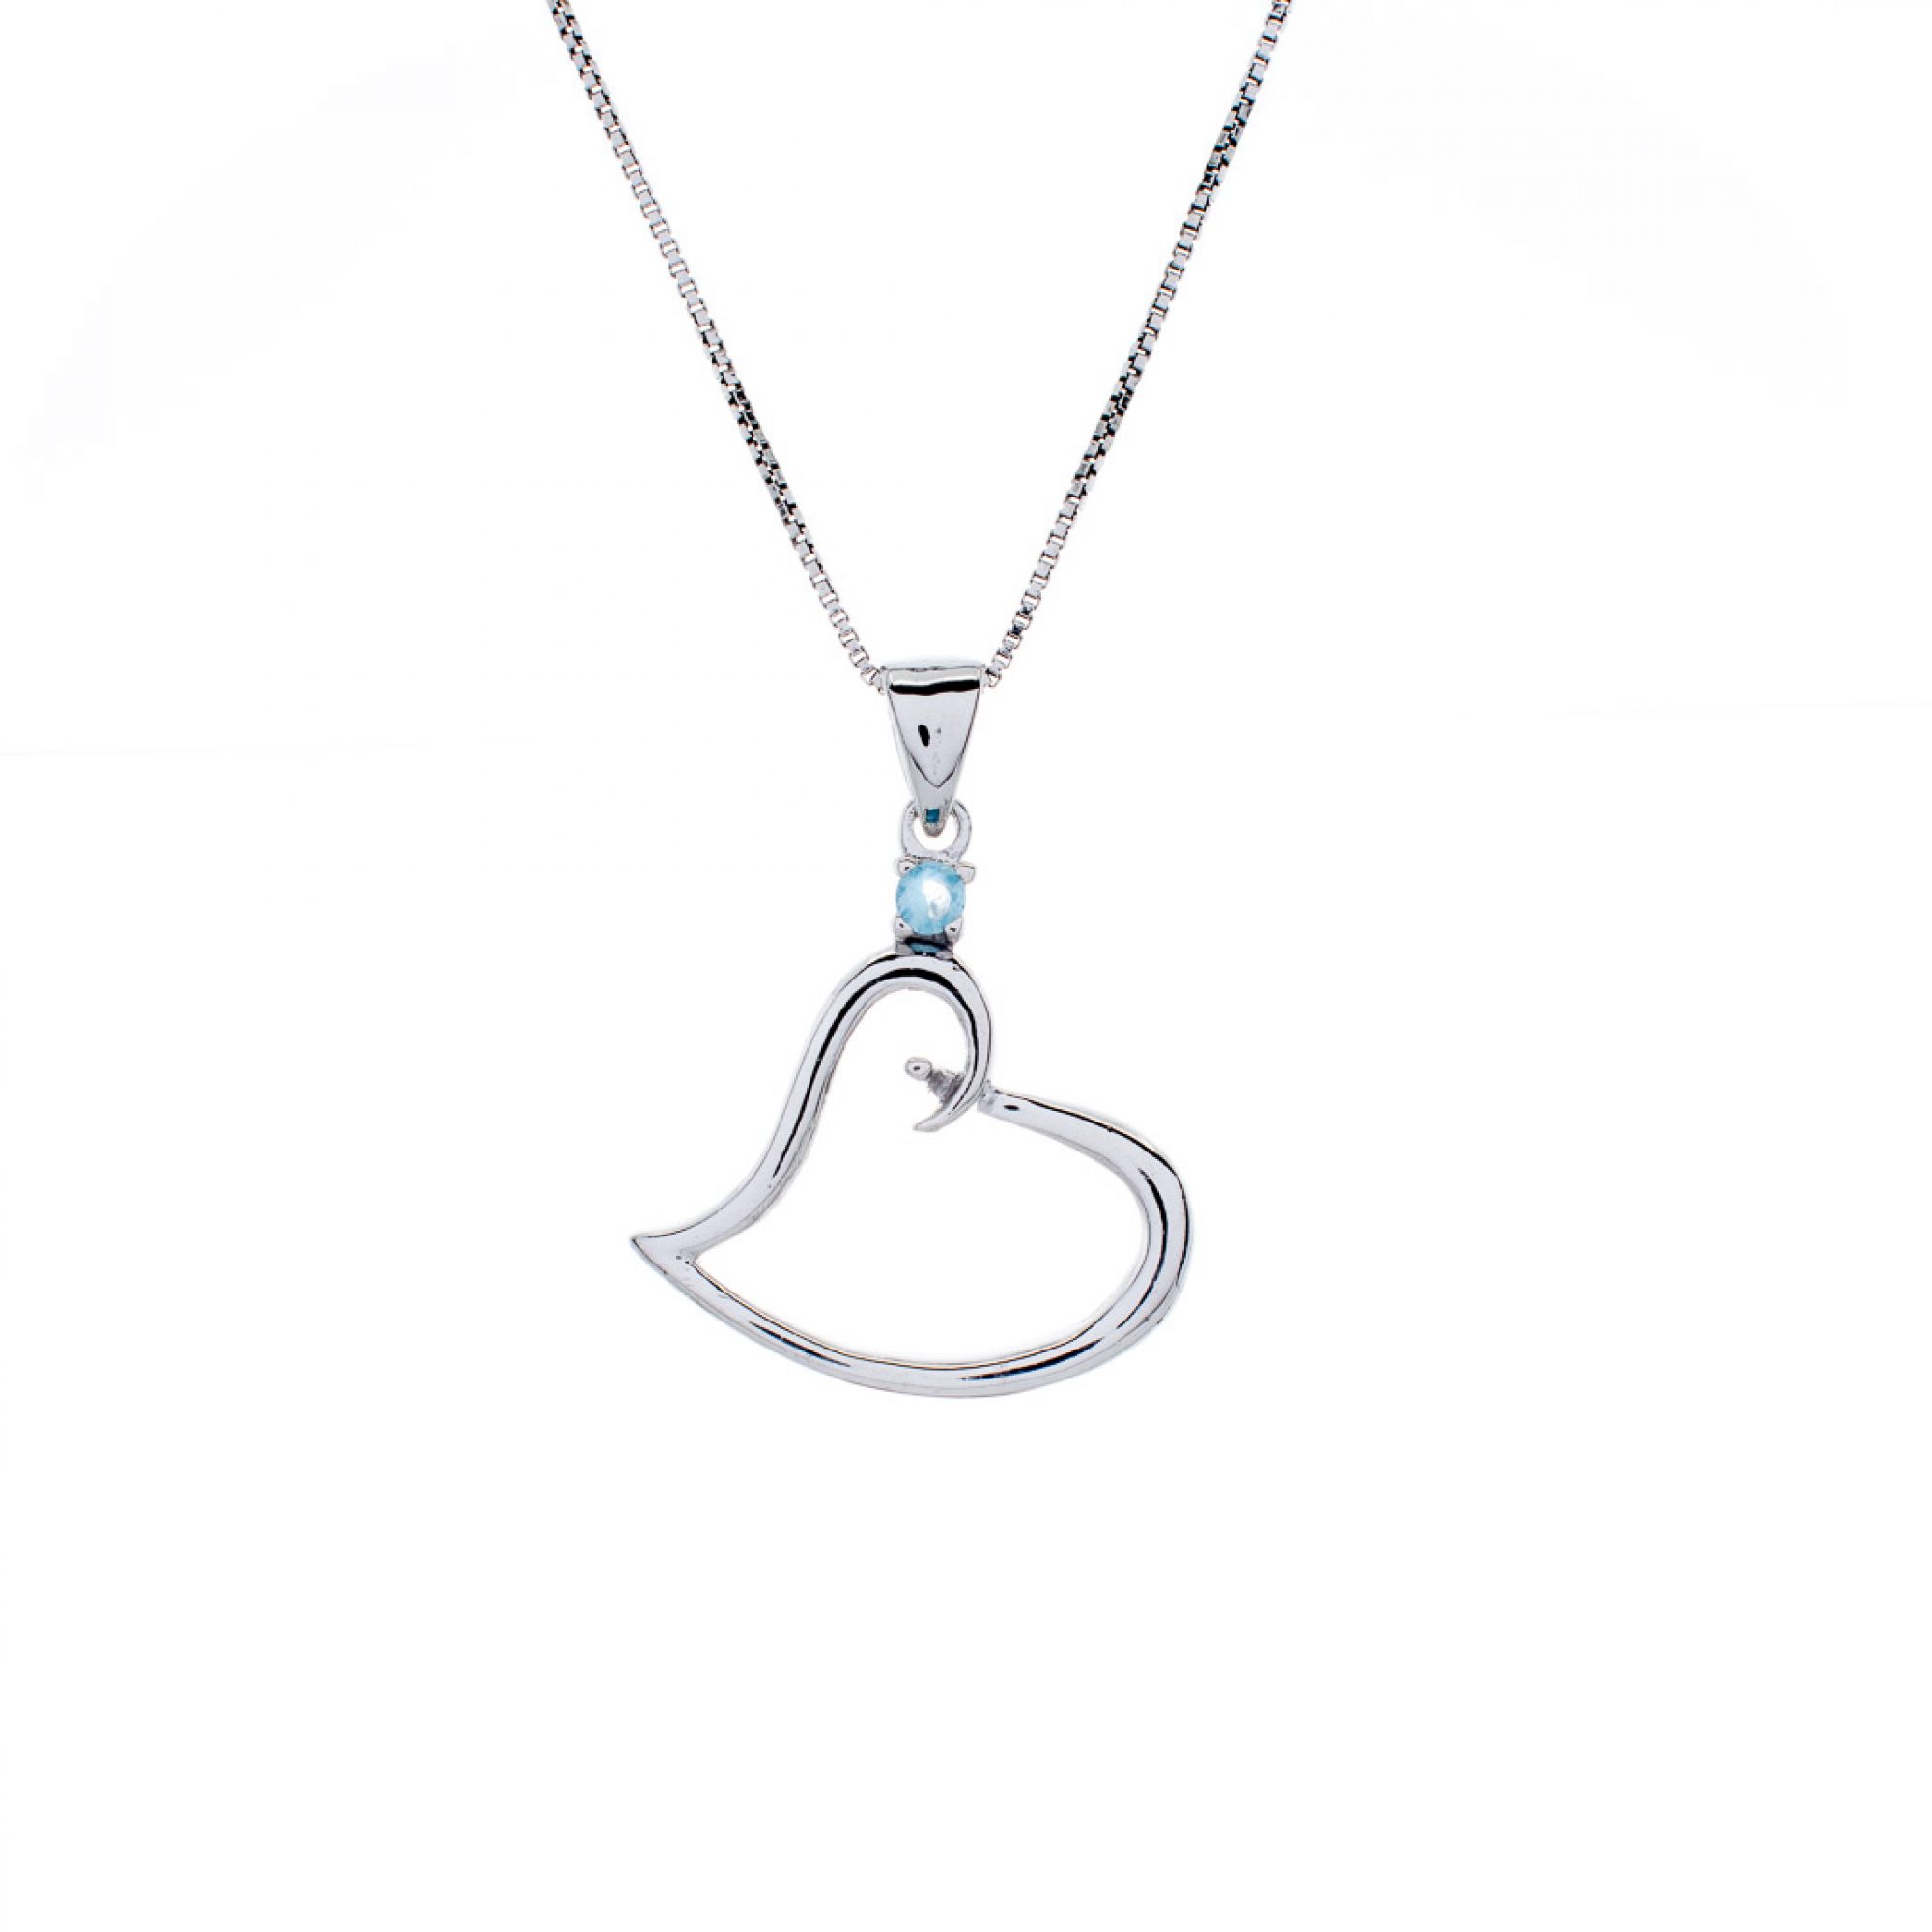 Heart necklace with aqua marine stone